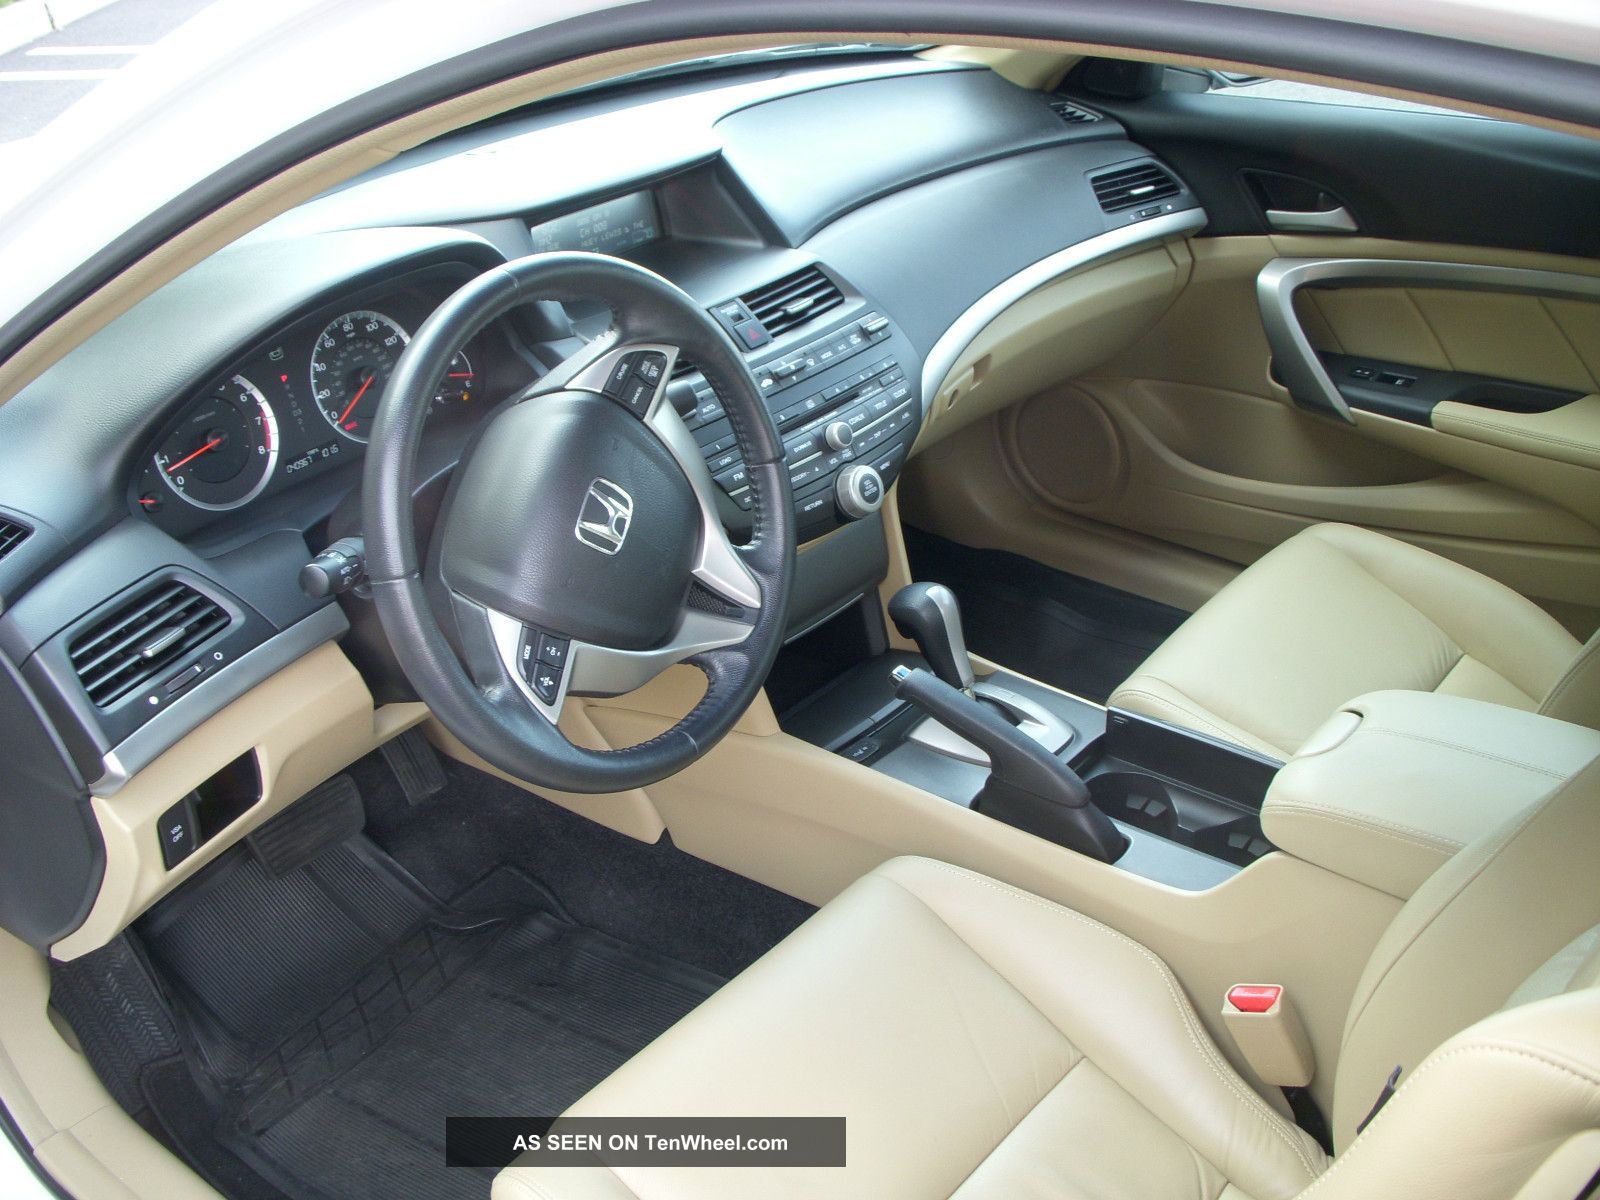 2009 Honda Accord Coupe 6 Cyl Ex L White With Tan Interior